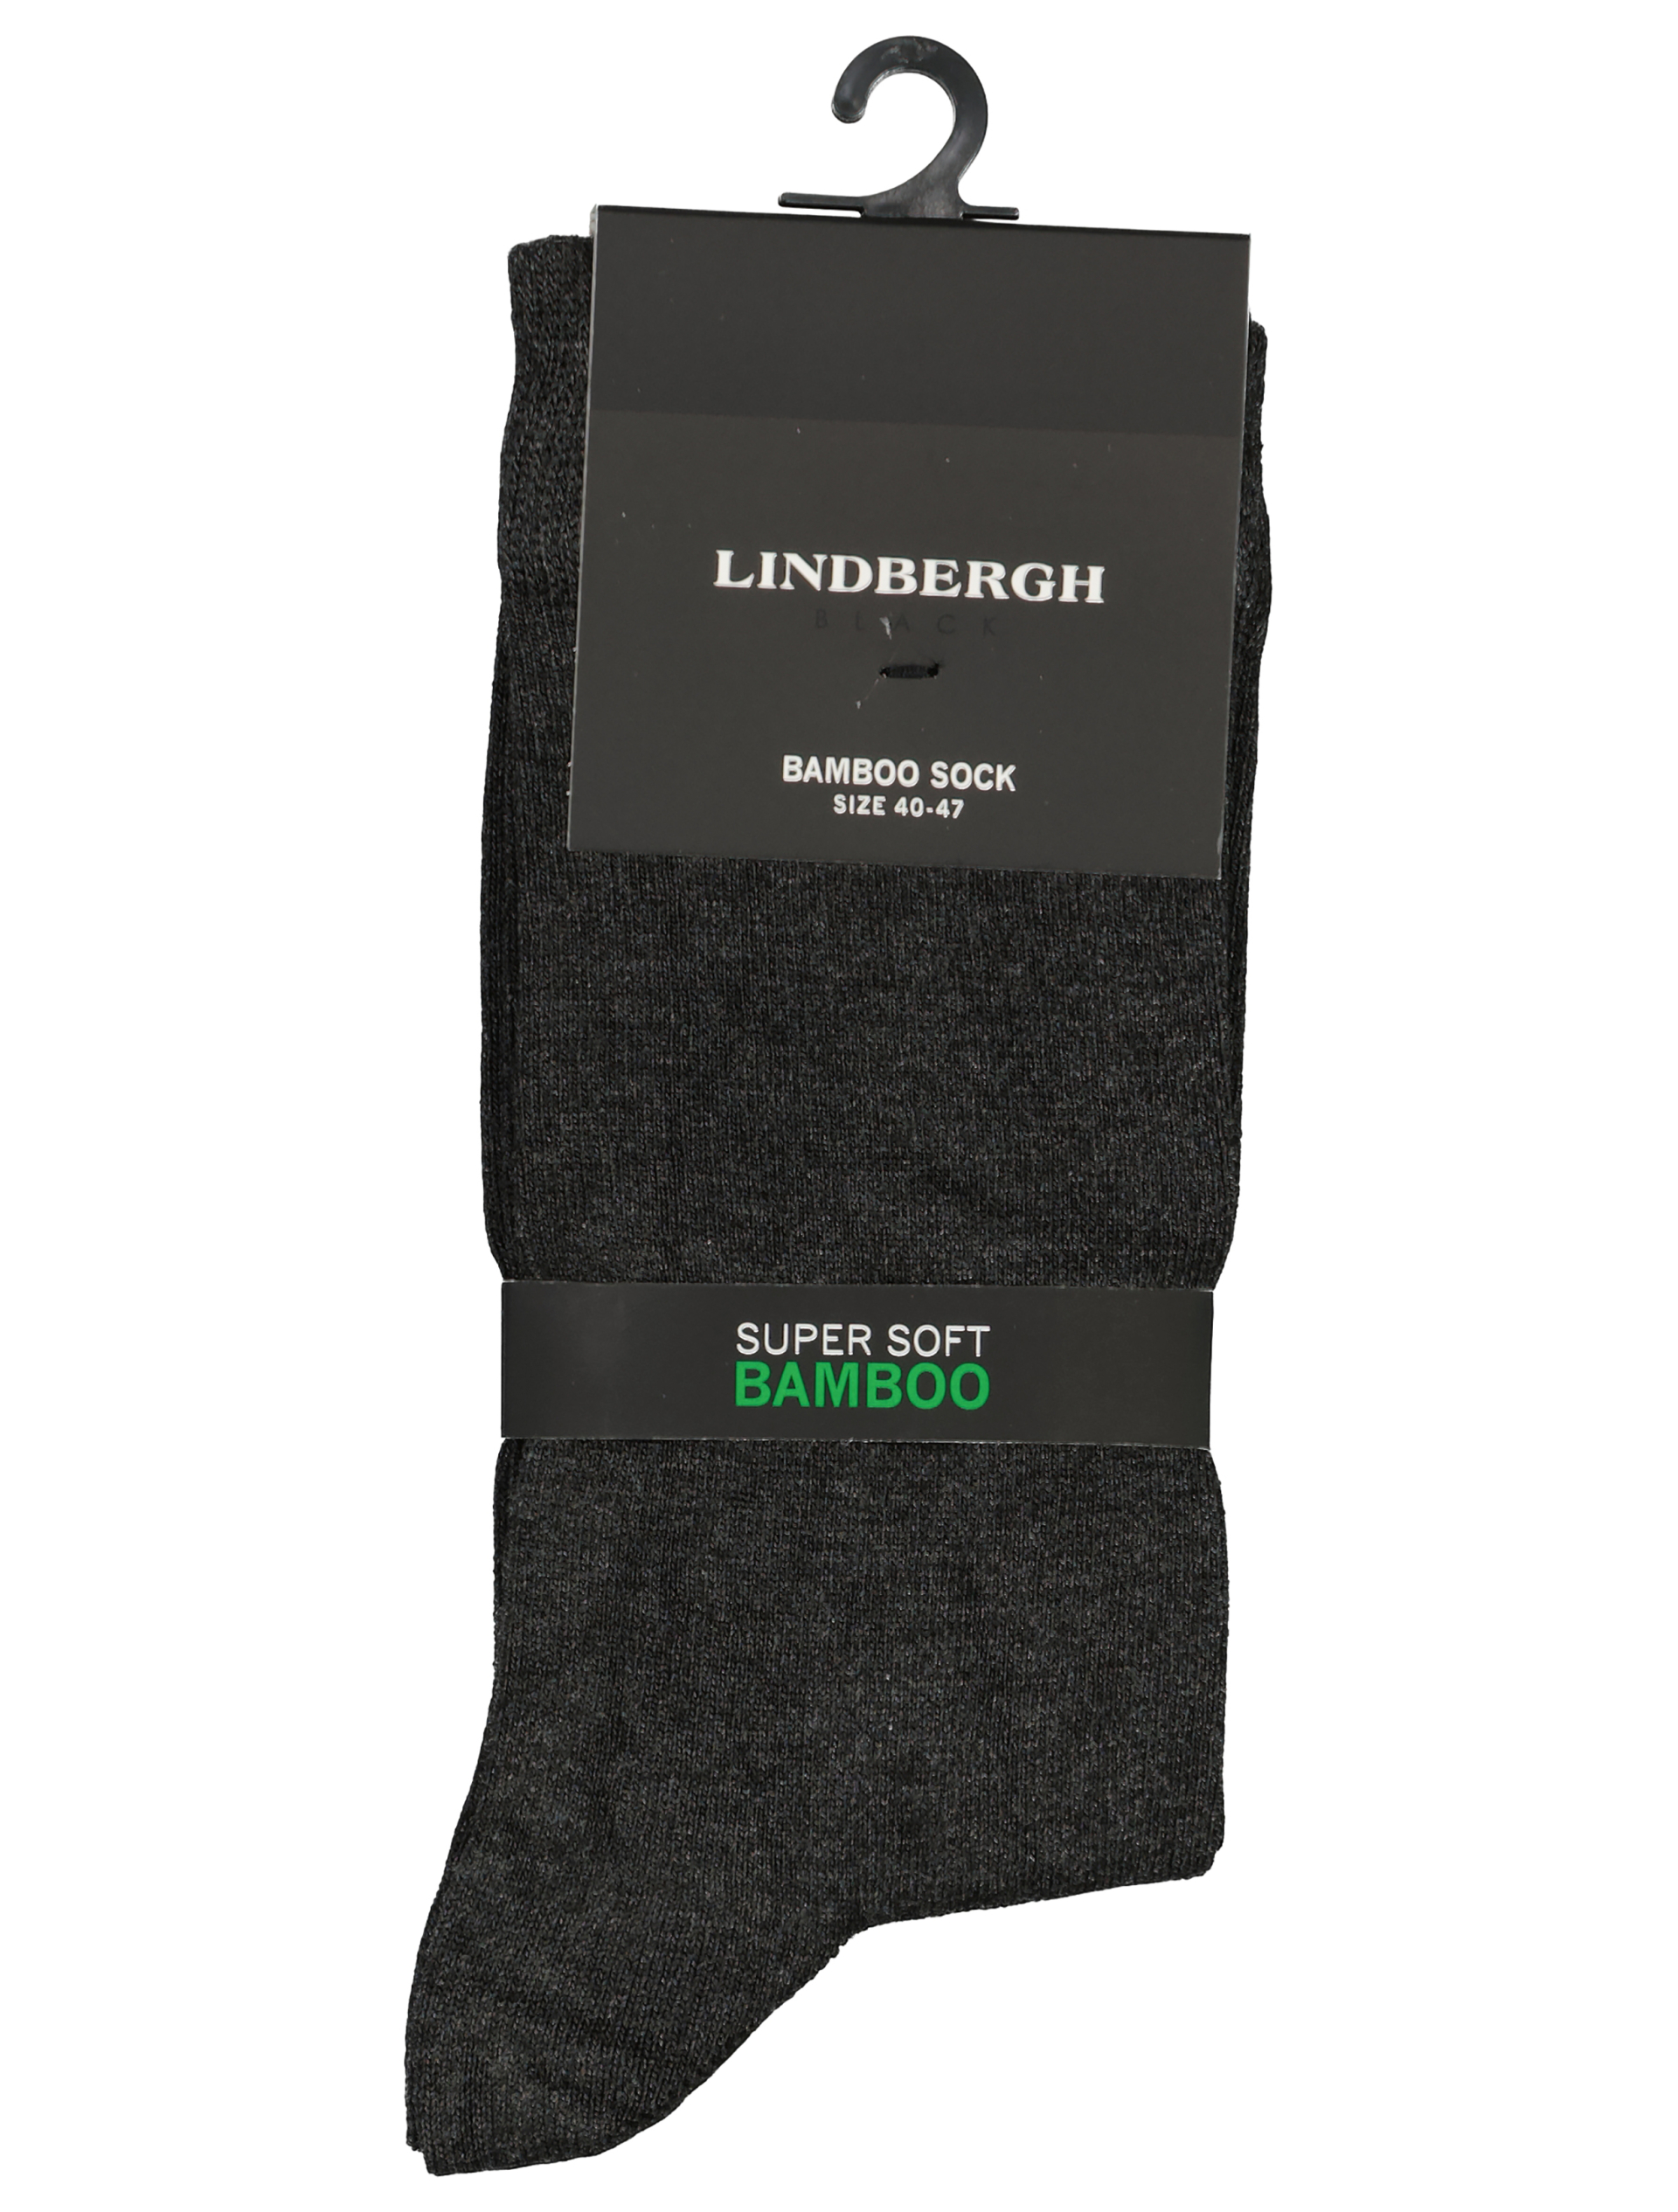 Lindbergh Socks grey / charcoal mel